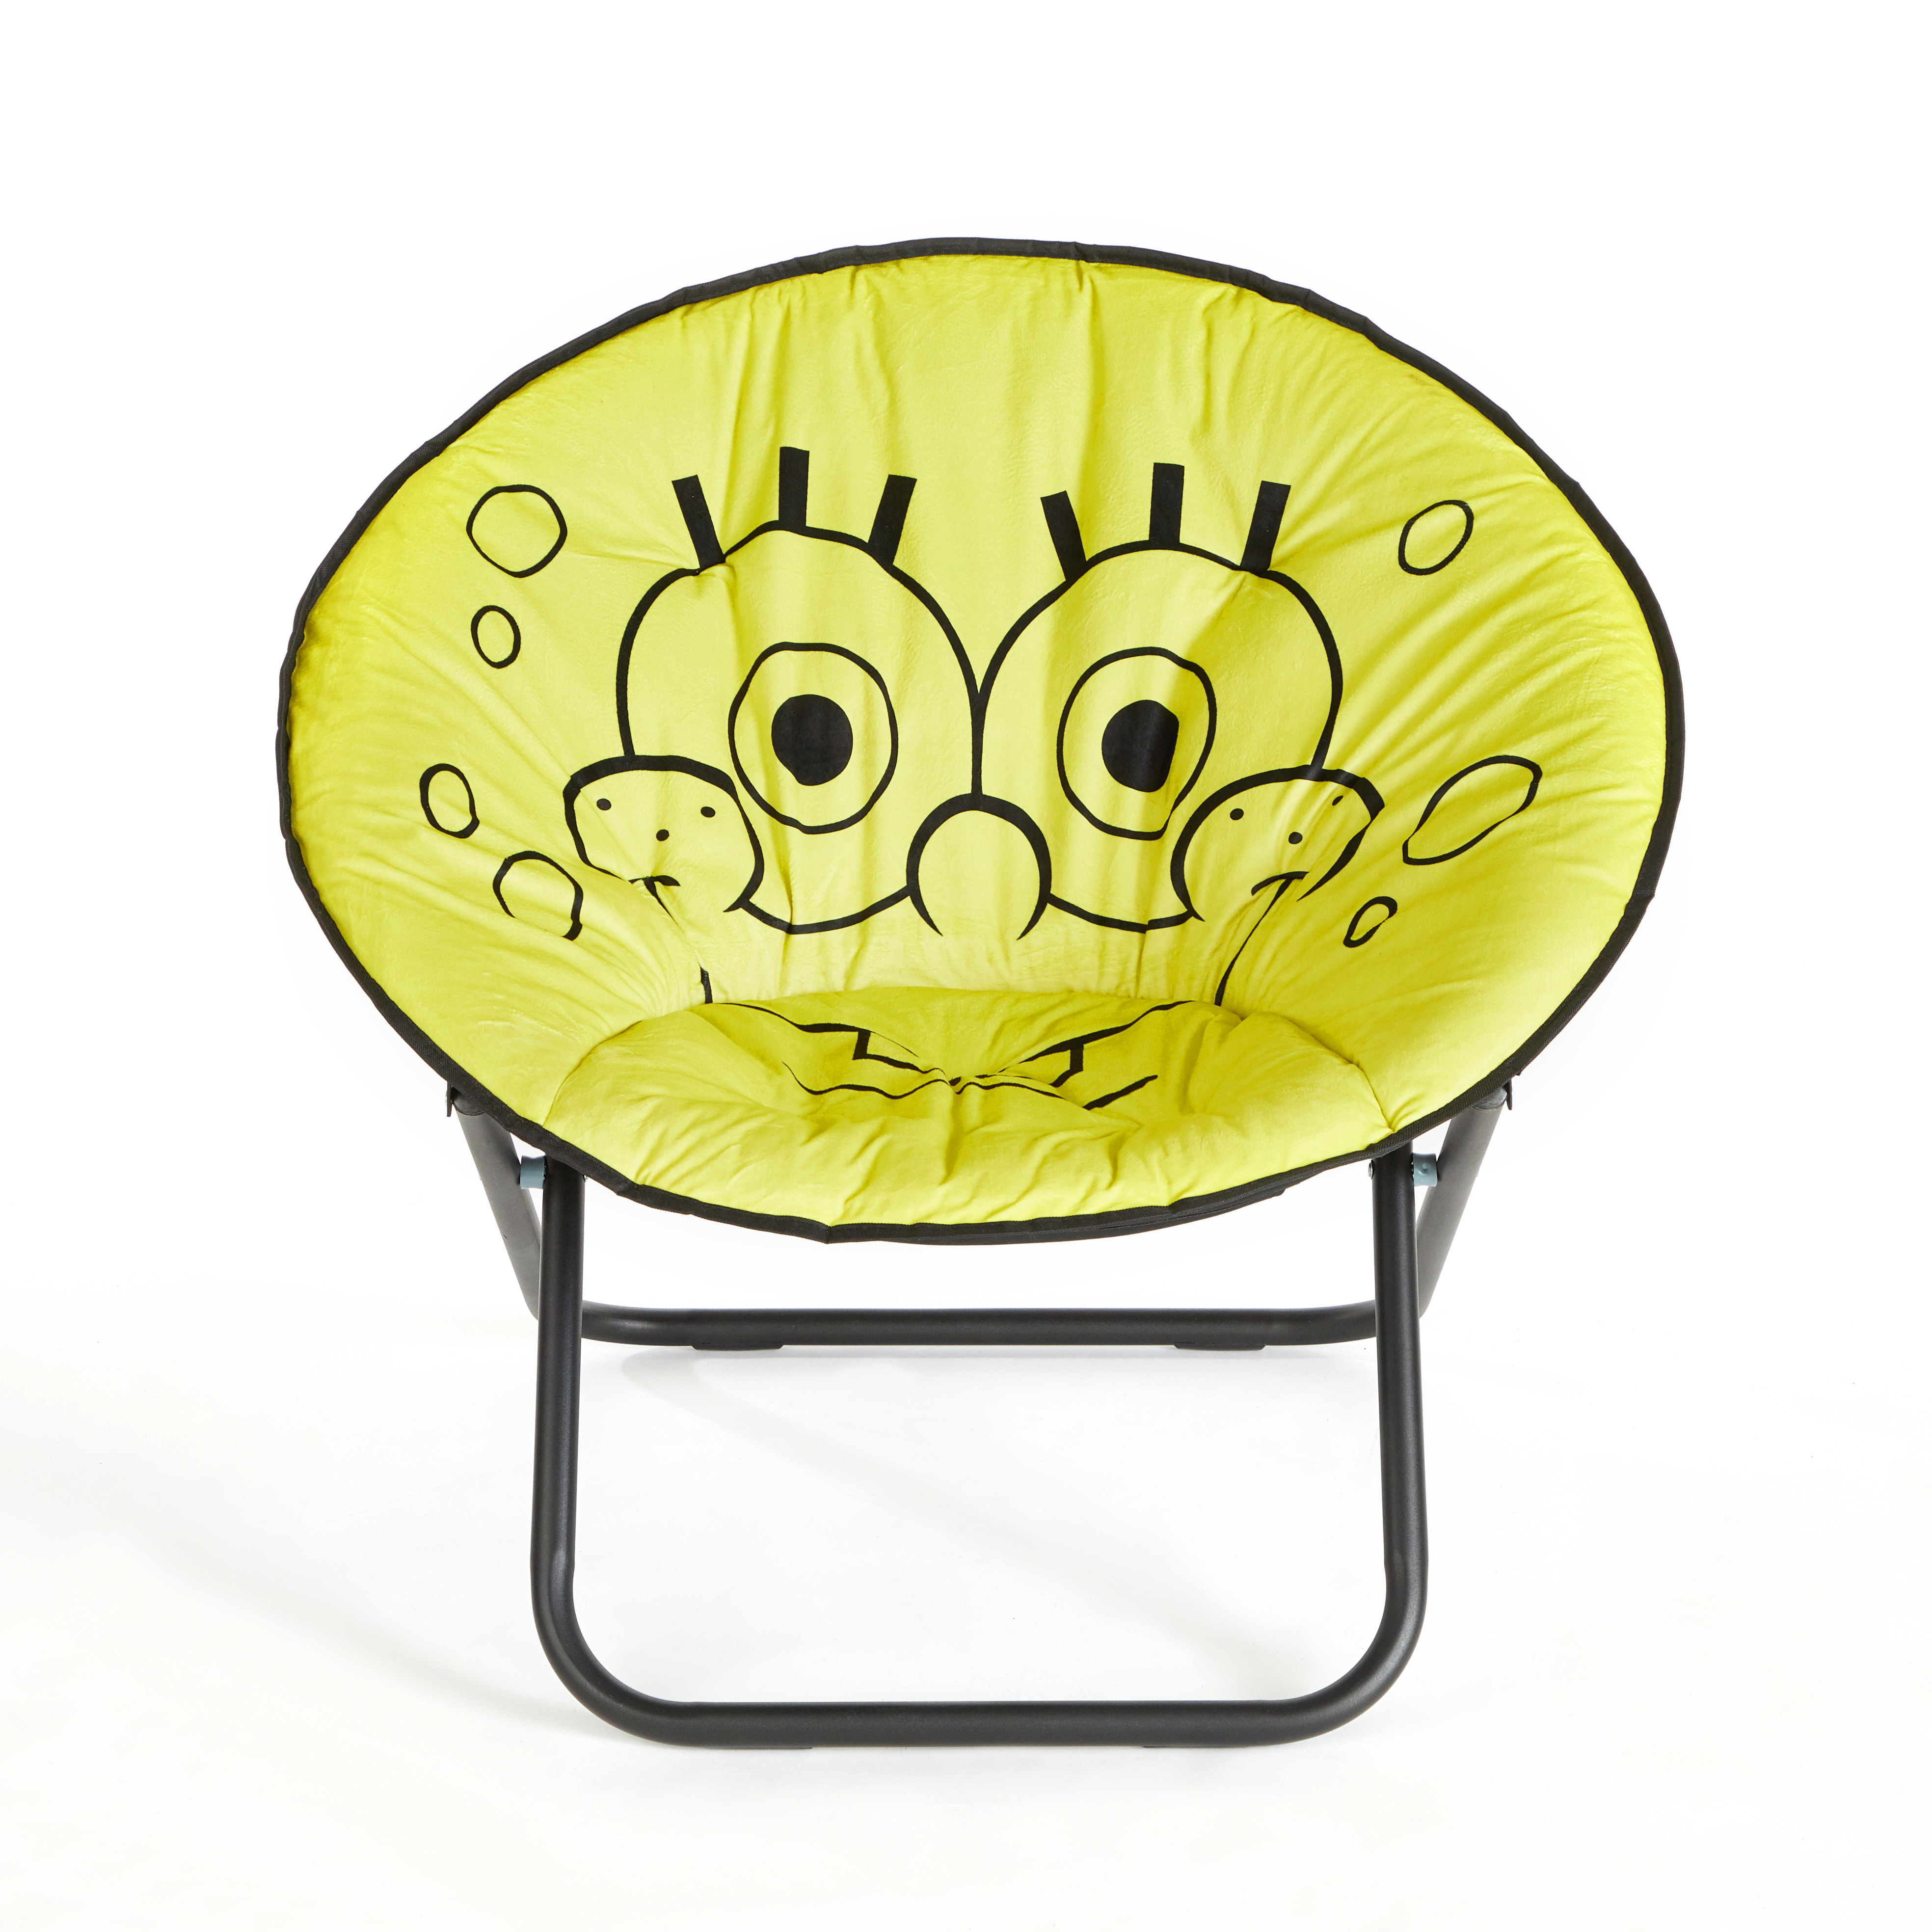 Nickelodeon Spongebob Squarepants 30" Oversized Folding Saucer Chair, Yellow - image 2 of 6